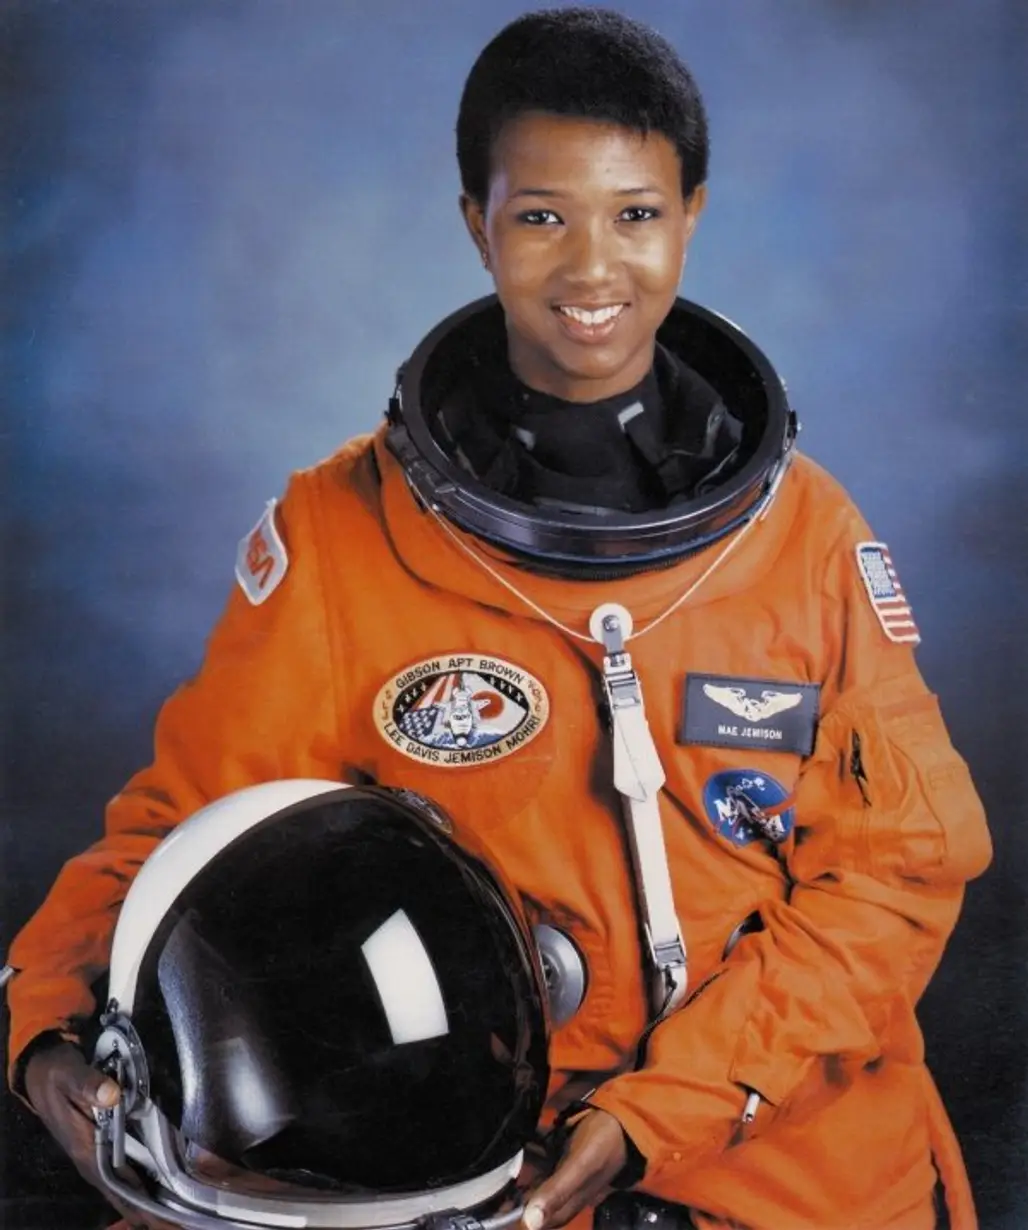 Mae C. Jemison (astronaut – 1956-)